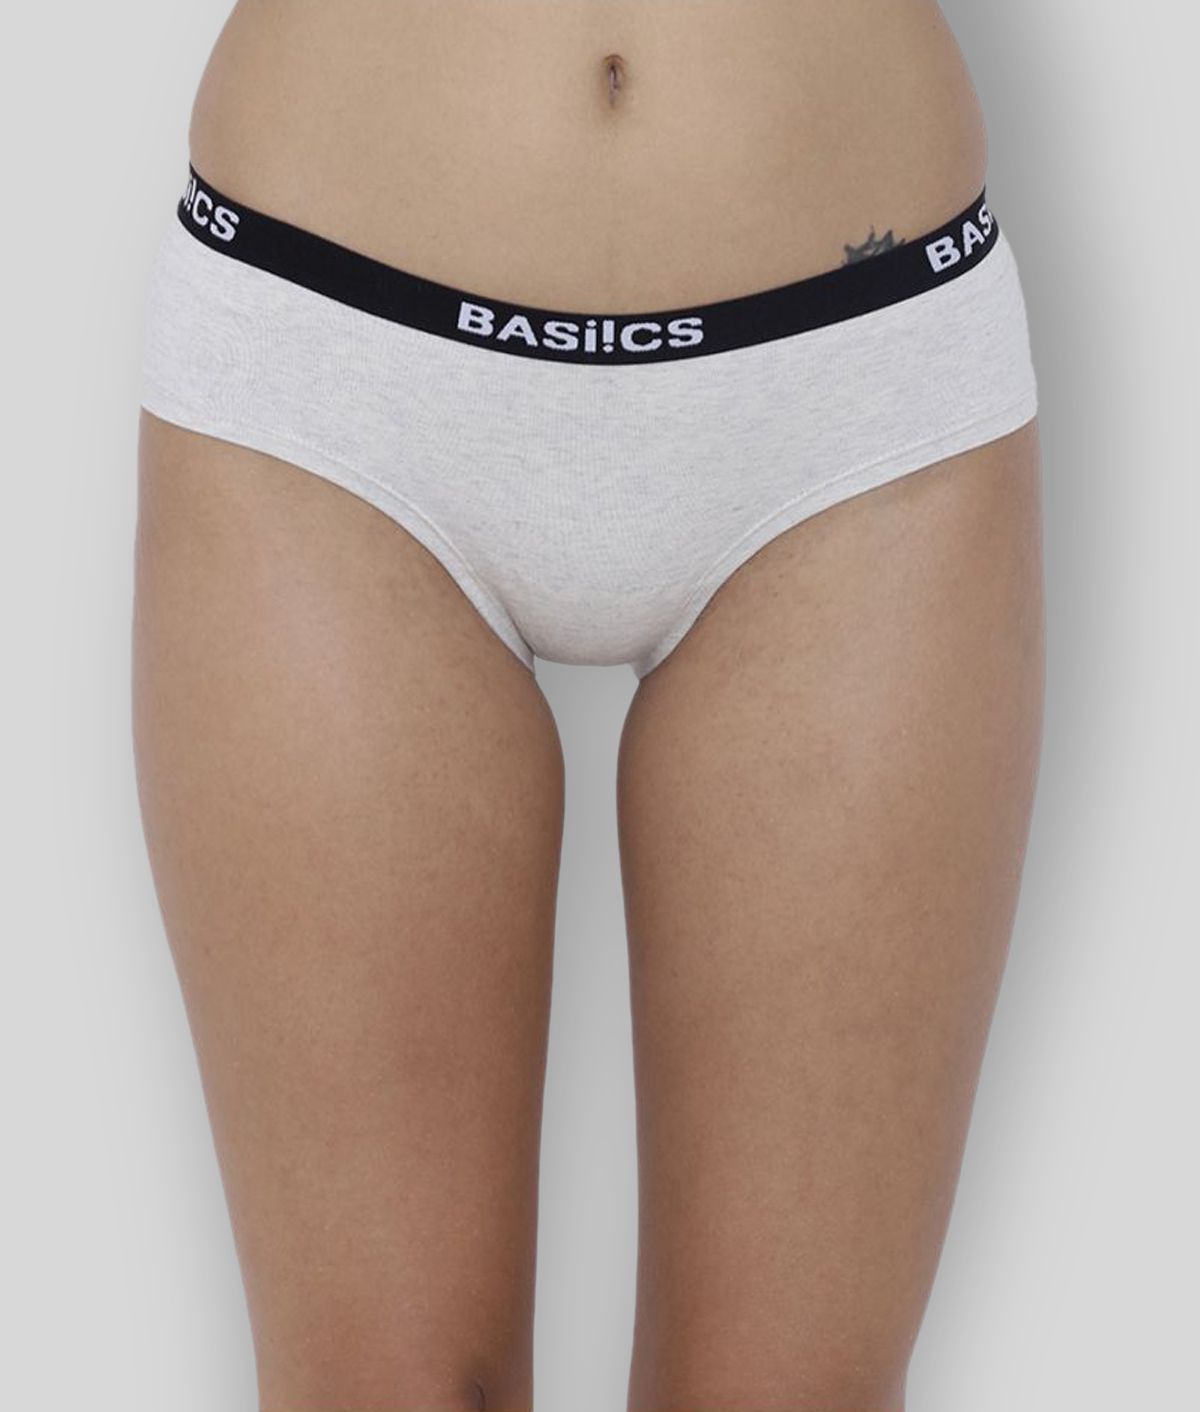     			BASIICS by La Intimo Cotton Bikini Panties